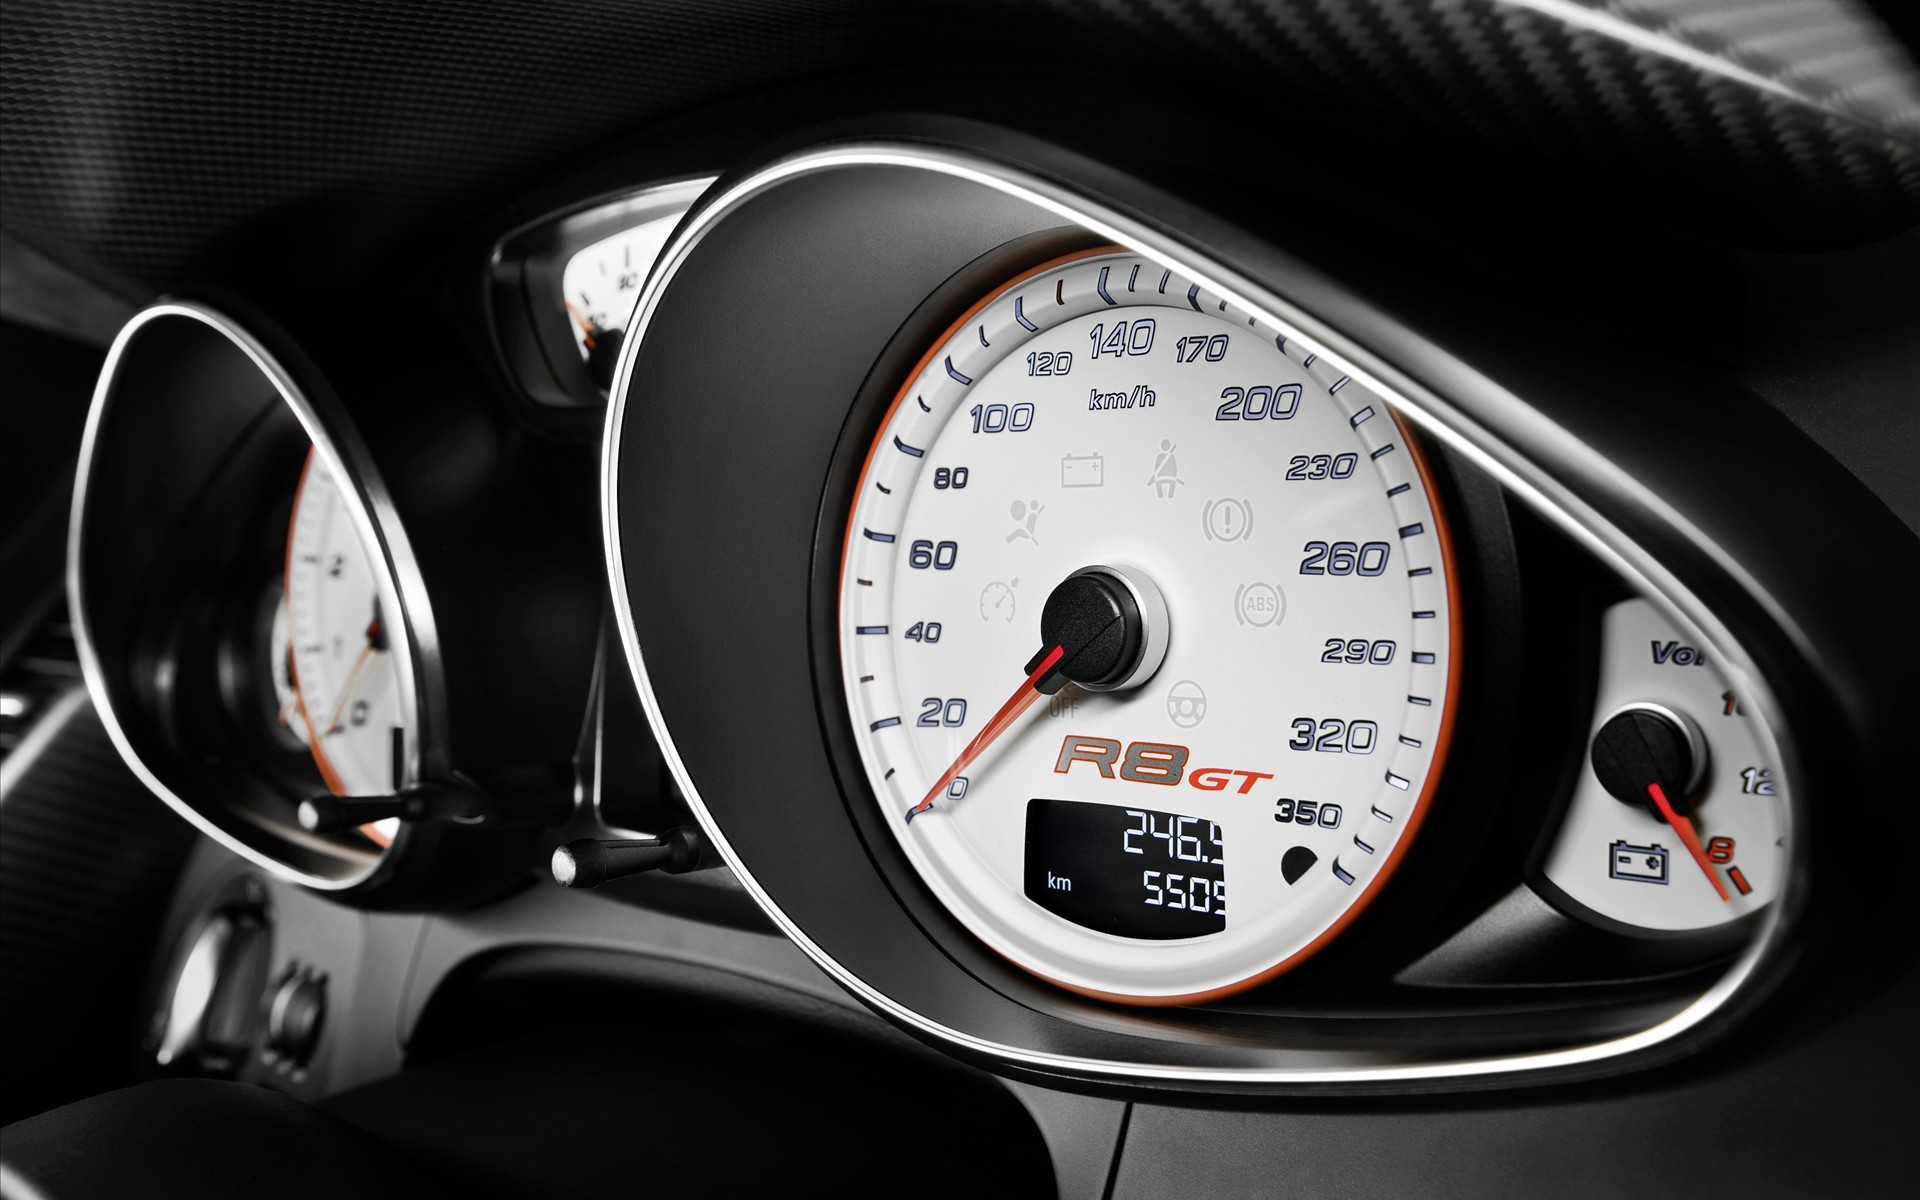 Free Hd Audi R8 Gt Gauge Car Desktop Wallpapers Download